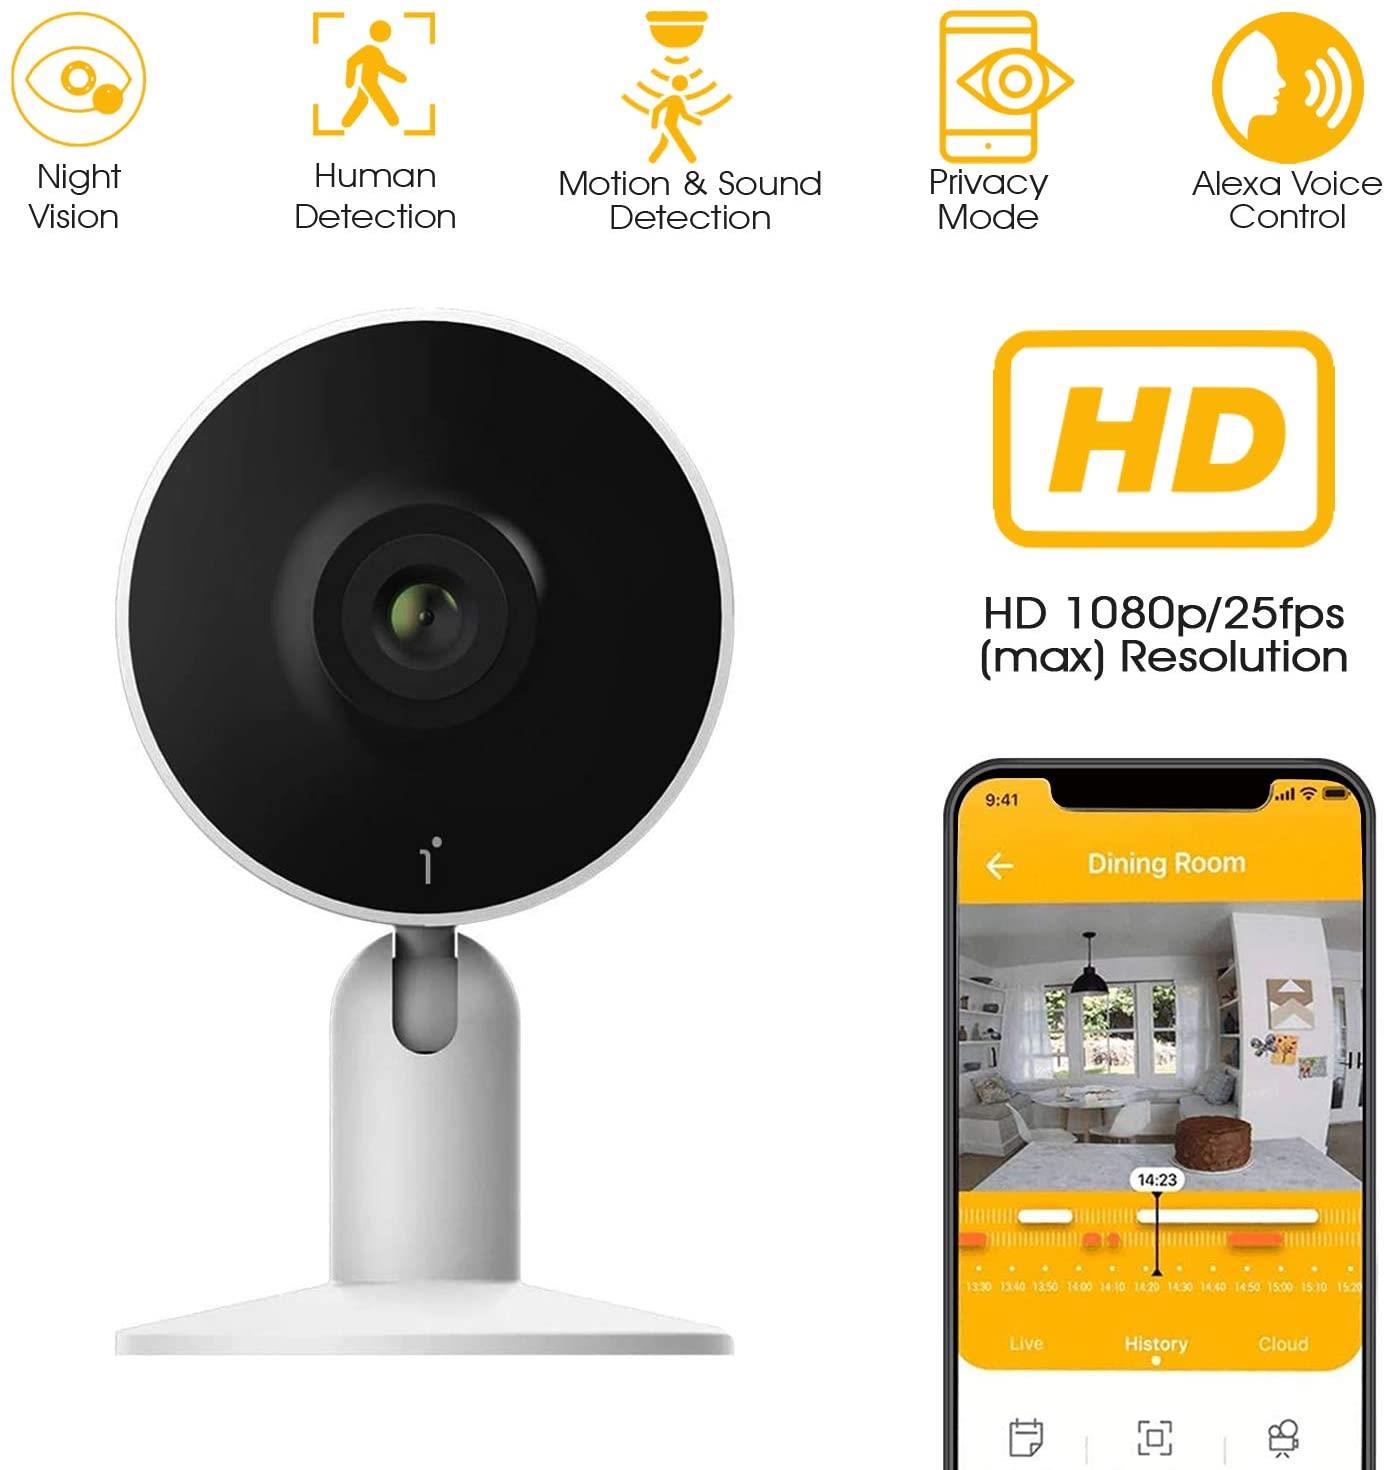 Arenti In1-32 Indoor Wi-Fi Mini Camera With SD Card